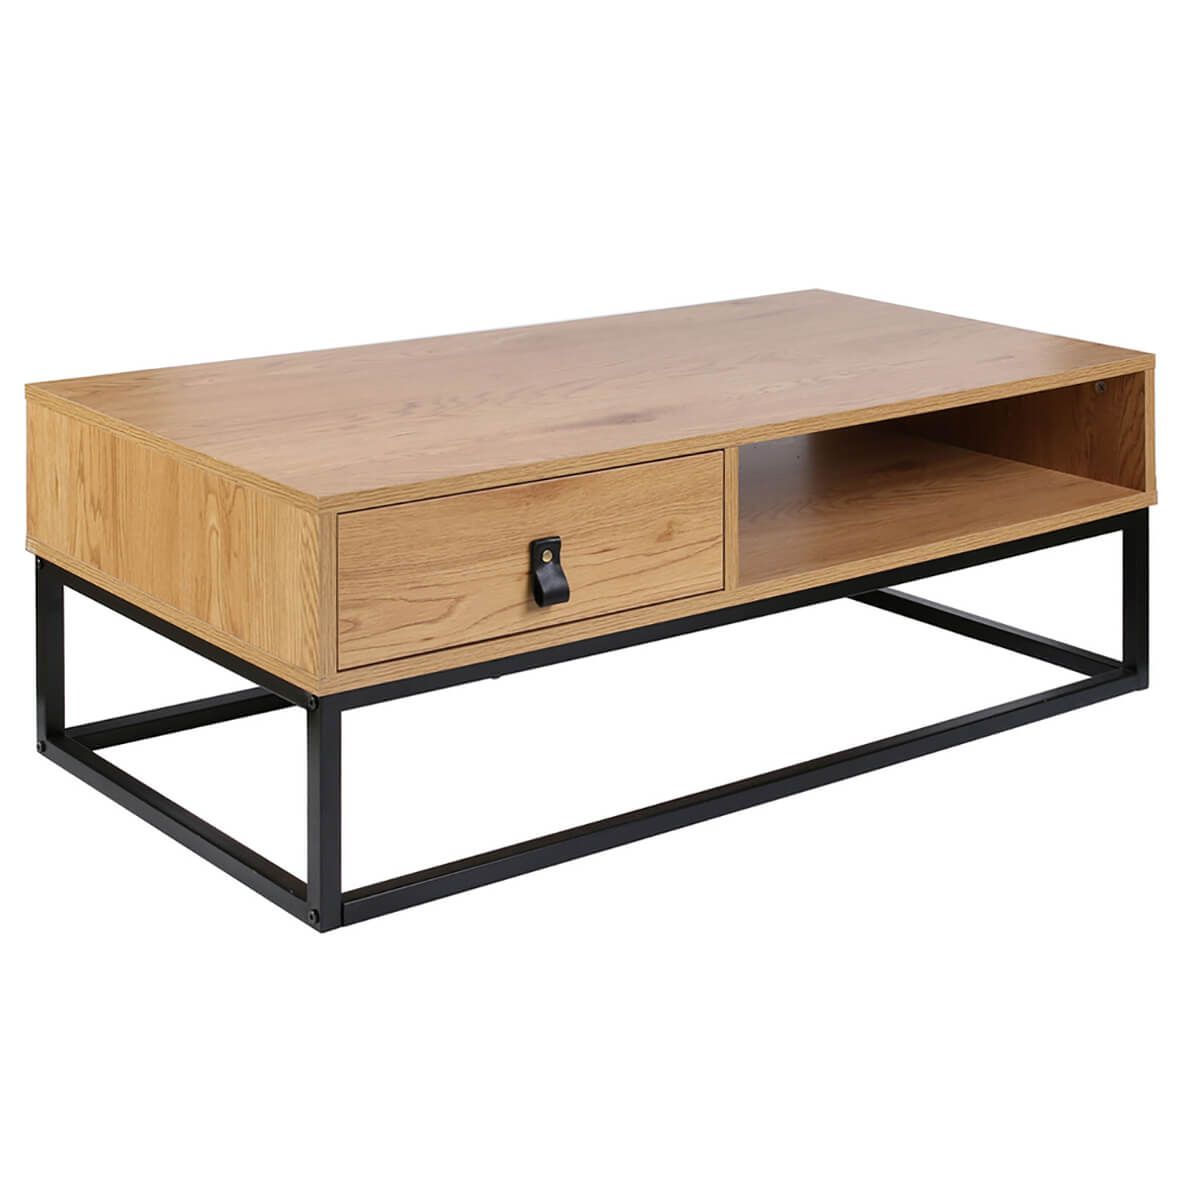 Table basse 1 tiroir aspect bois et pied